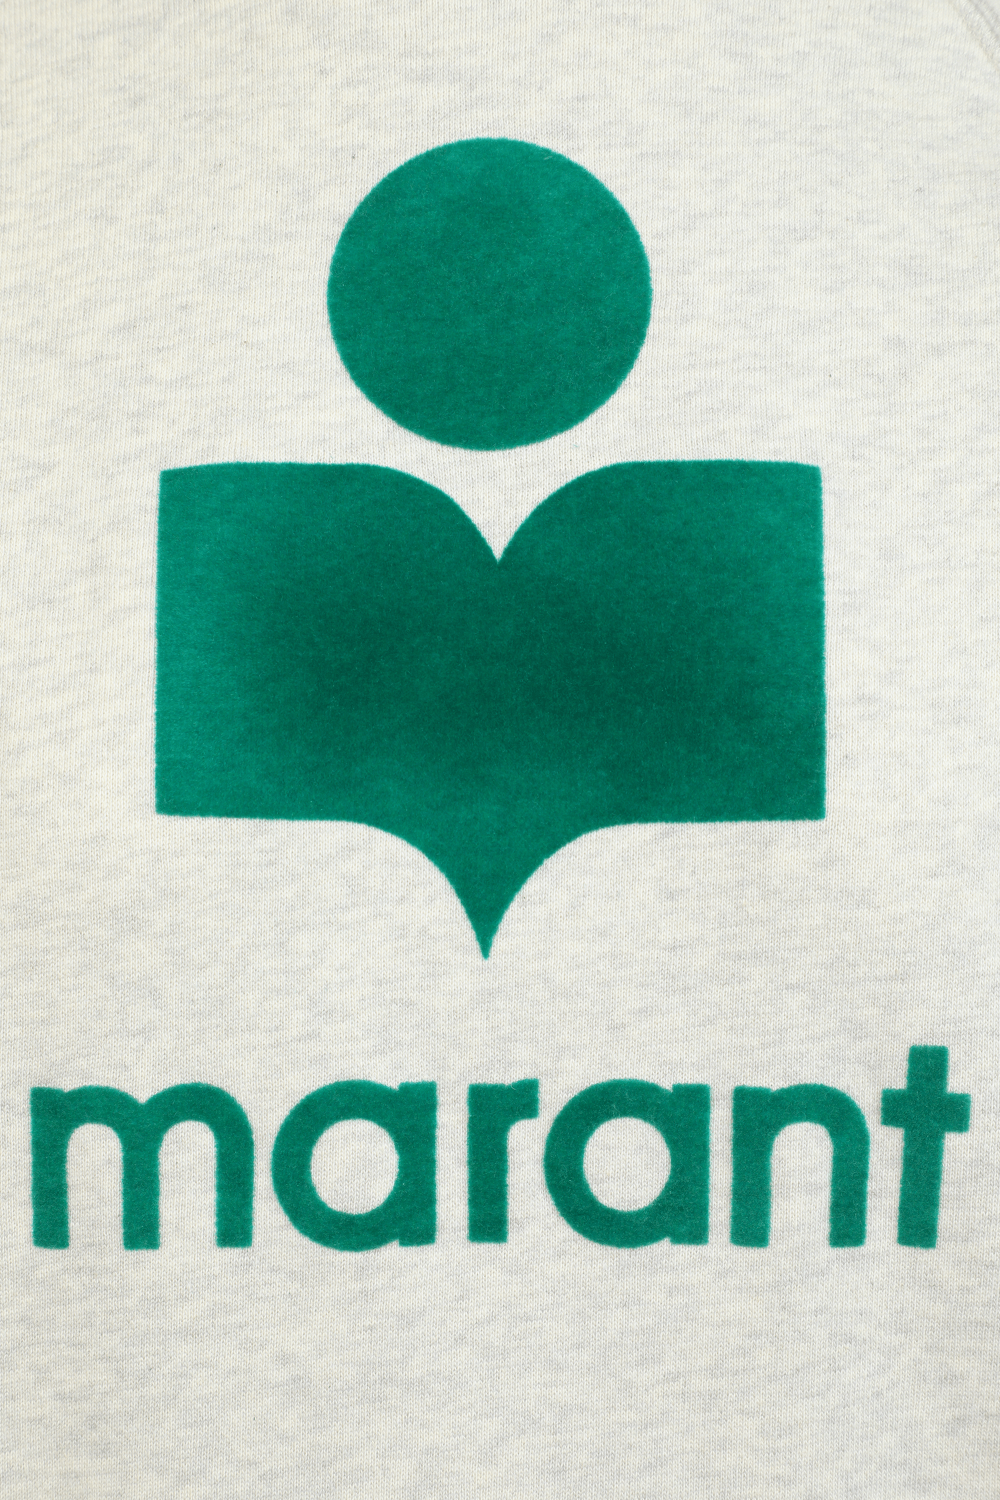 Milly Marant Sweatshirt in Grey and Green ISABEL MARANT